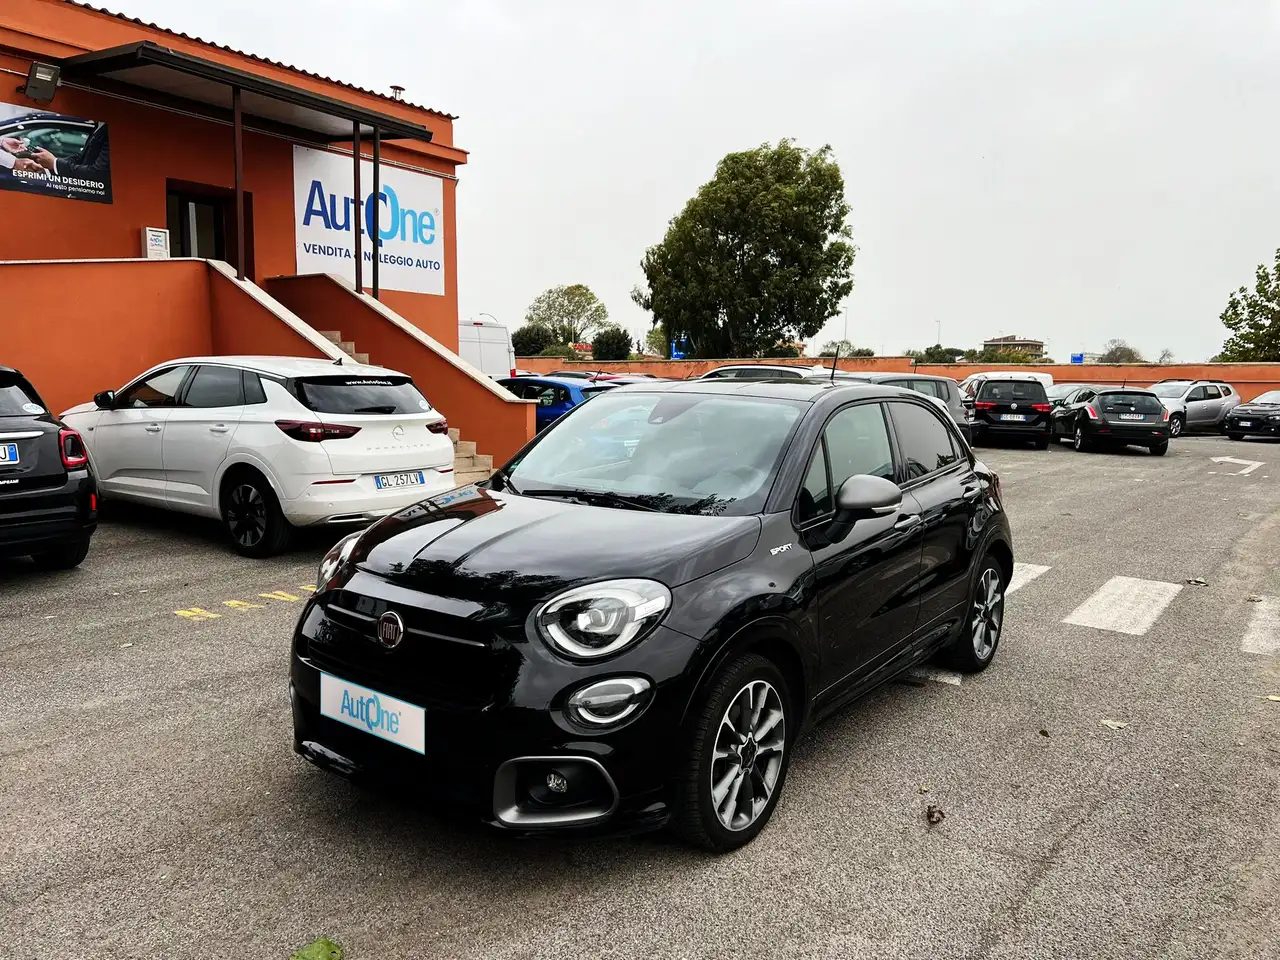 Fiat 500X SUV/4x4/Pick-up in Zwart demo in Napoli - NA voor € 16.900,-